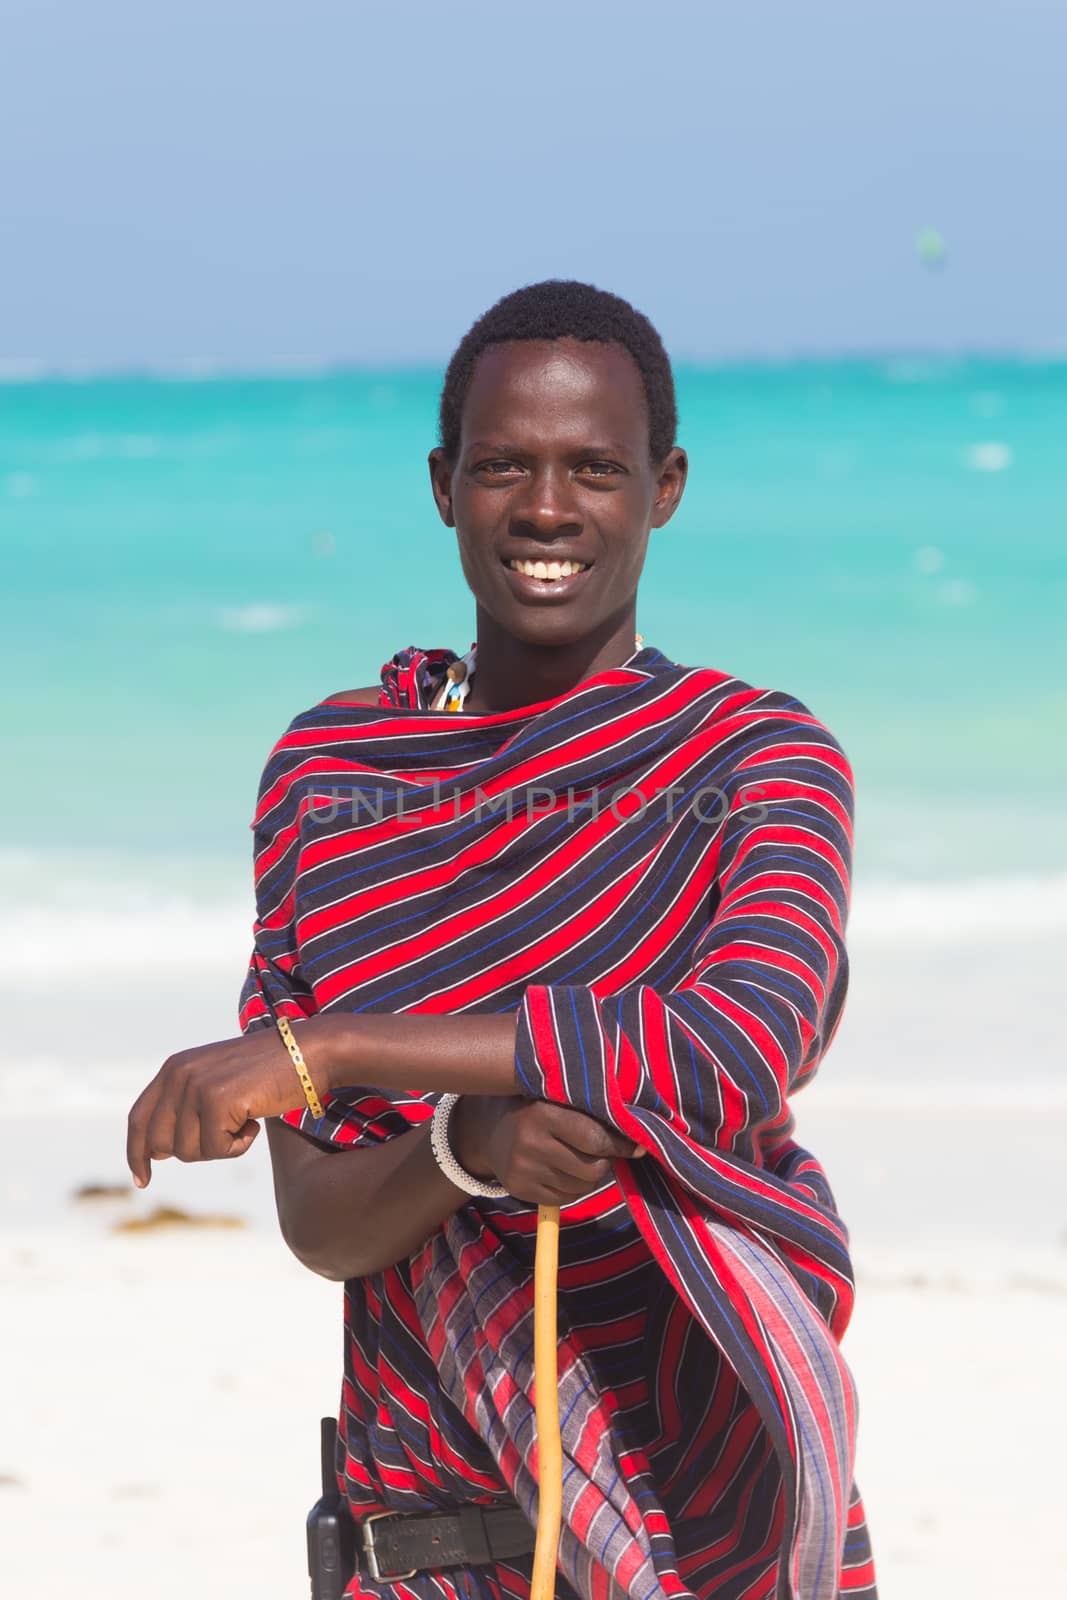 Traditonaly dressed masai black man on Paje beach. Maasai warrior on picture perfect tropical sandy beach on Zanzibar, Tanzania, East Africa.